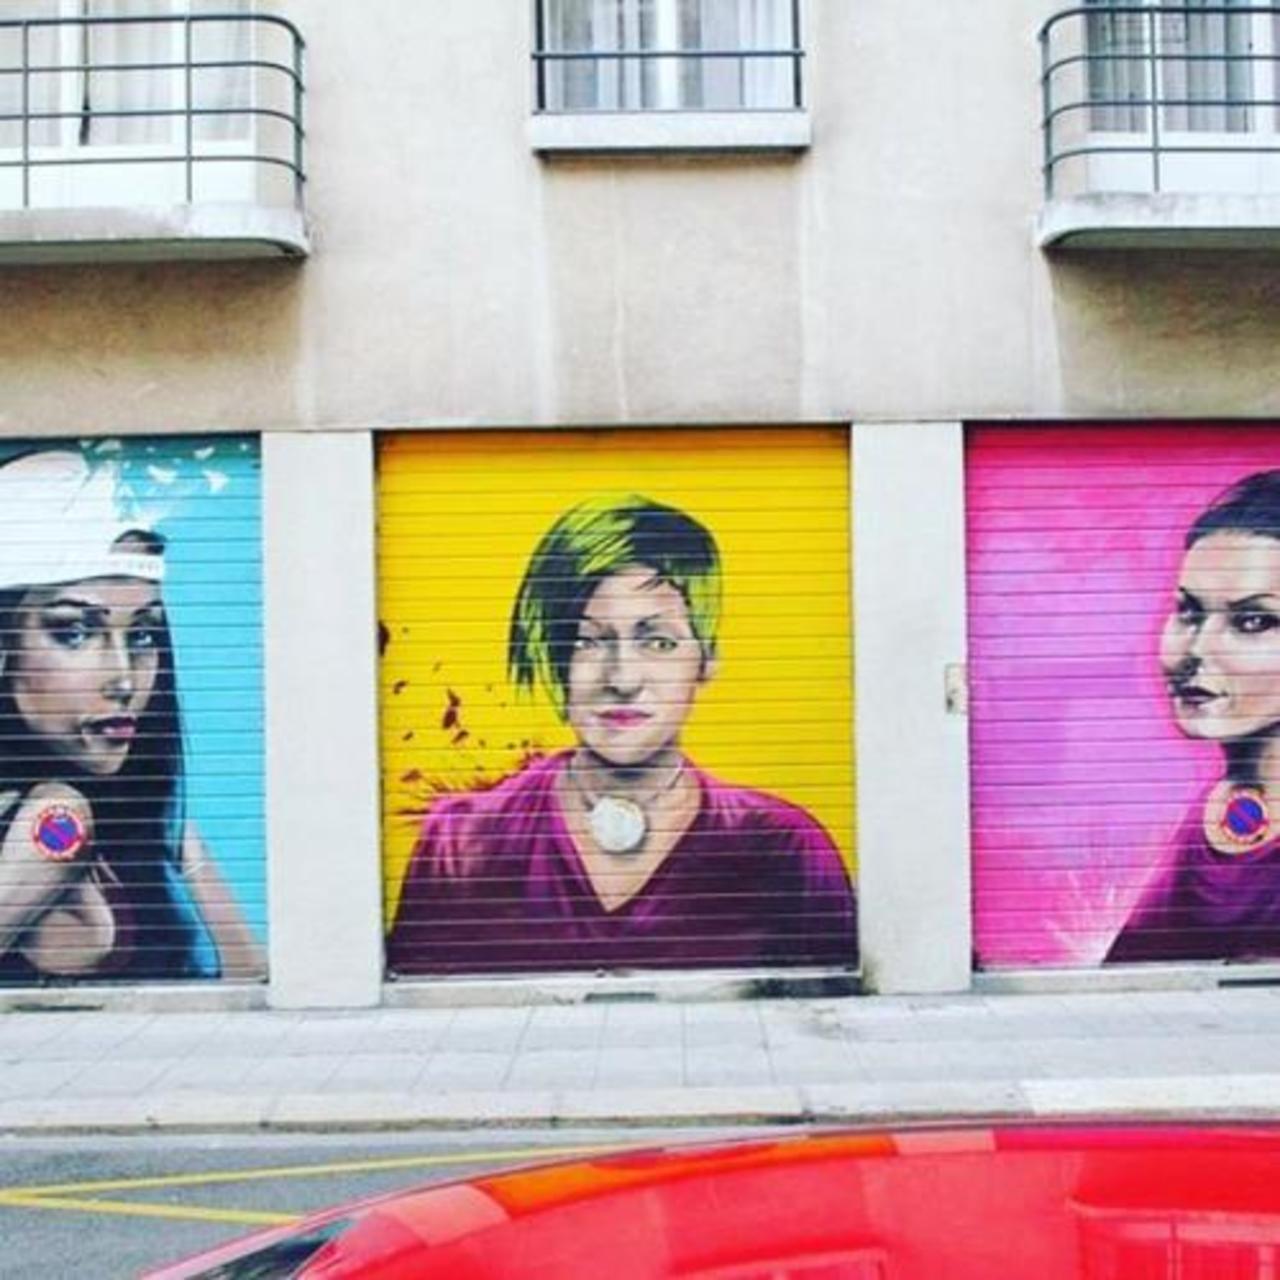 #streetcnina #streetart #graffiti #urban #urbanart #urbanwalls... #InspireArt - - https://wp.me/p6qjkV-4Gi http://t.co/leWpkKauAI